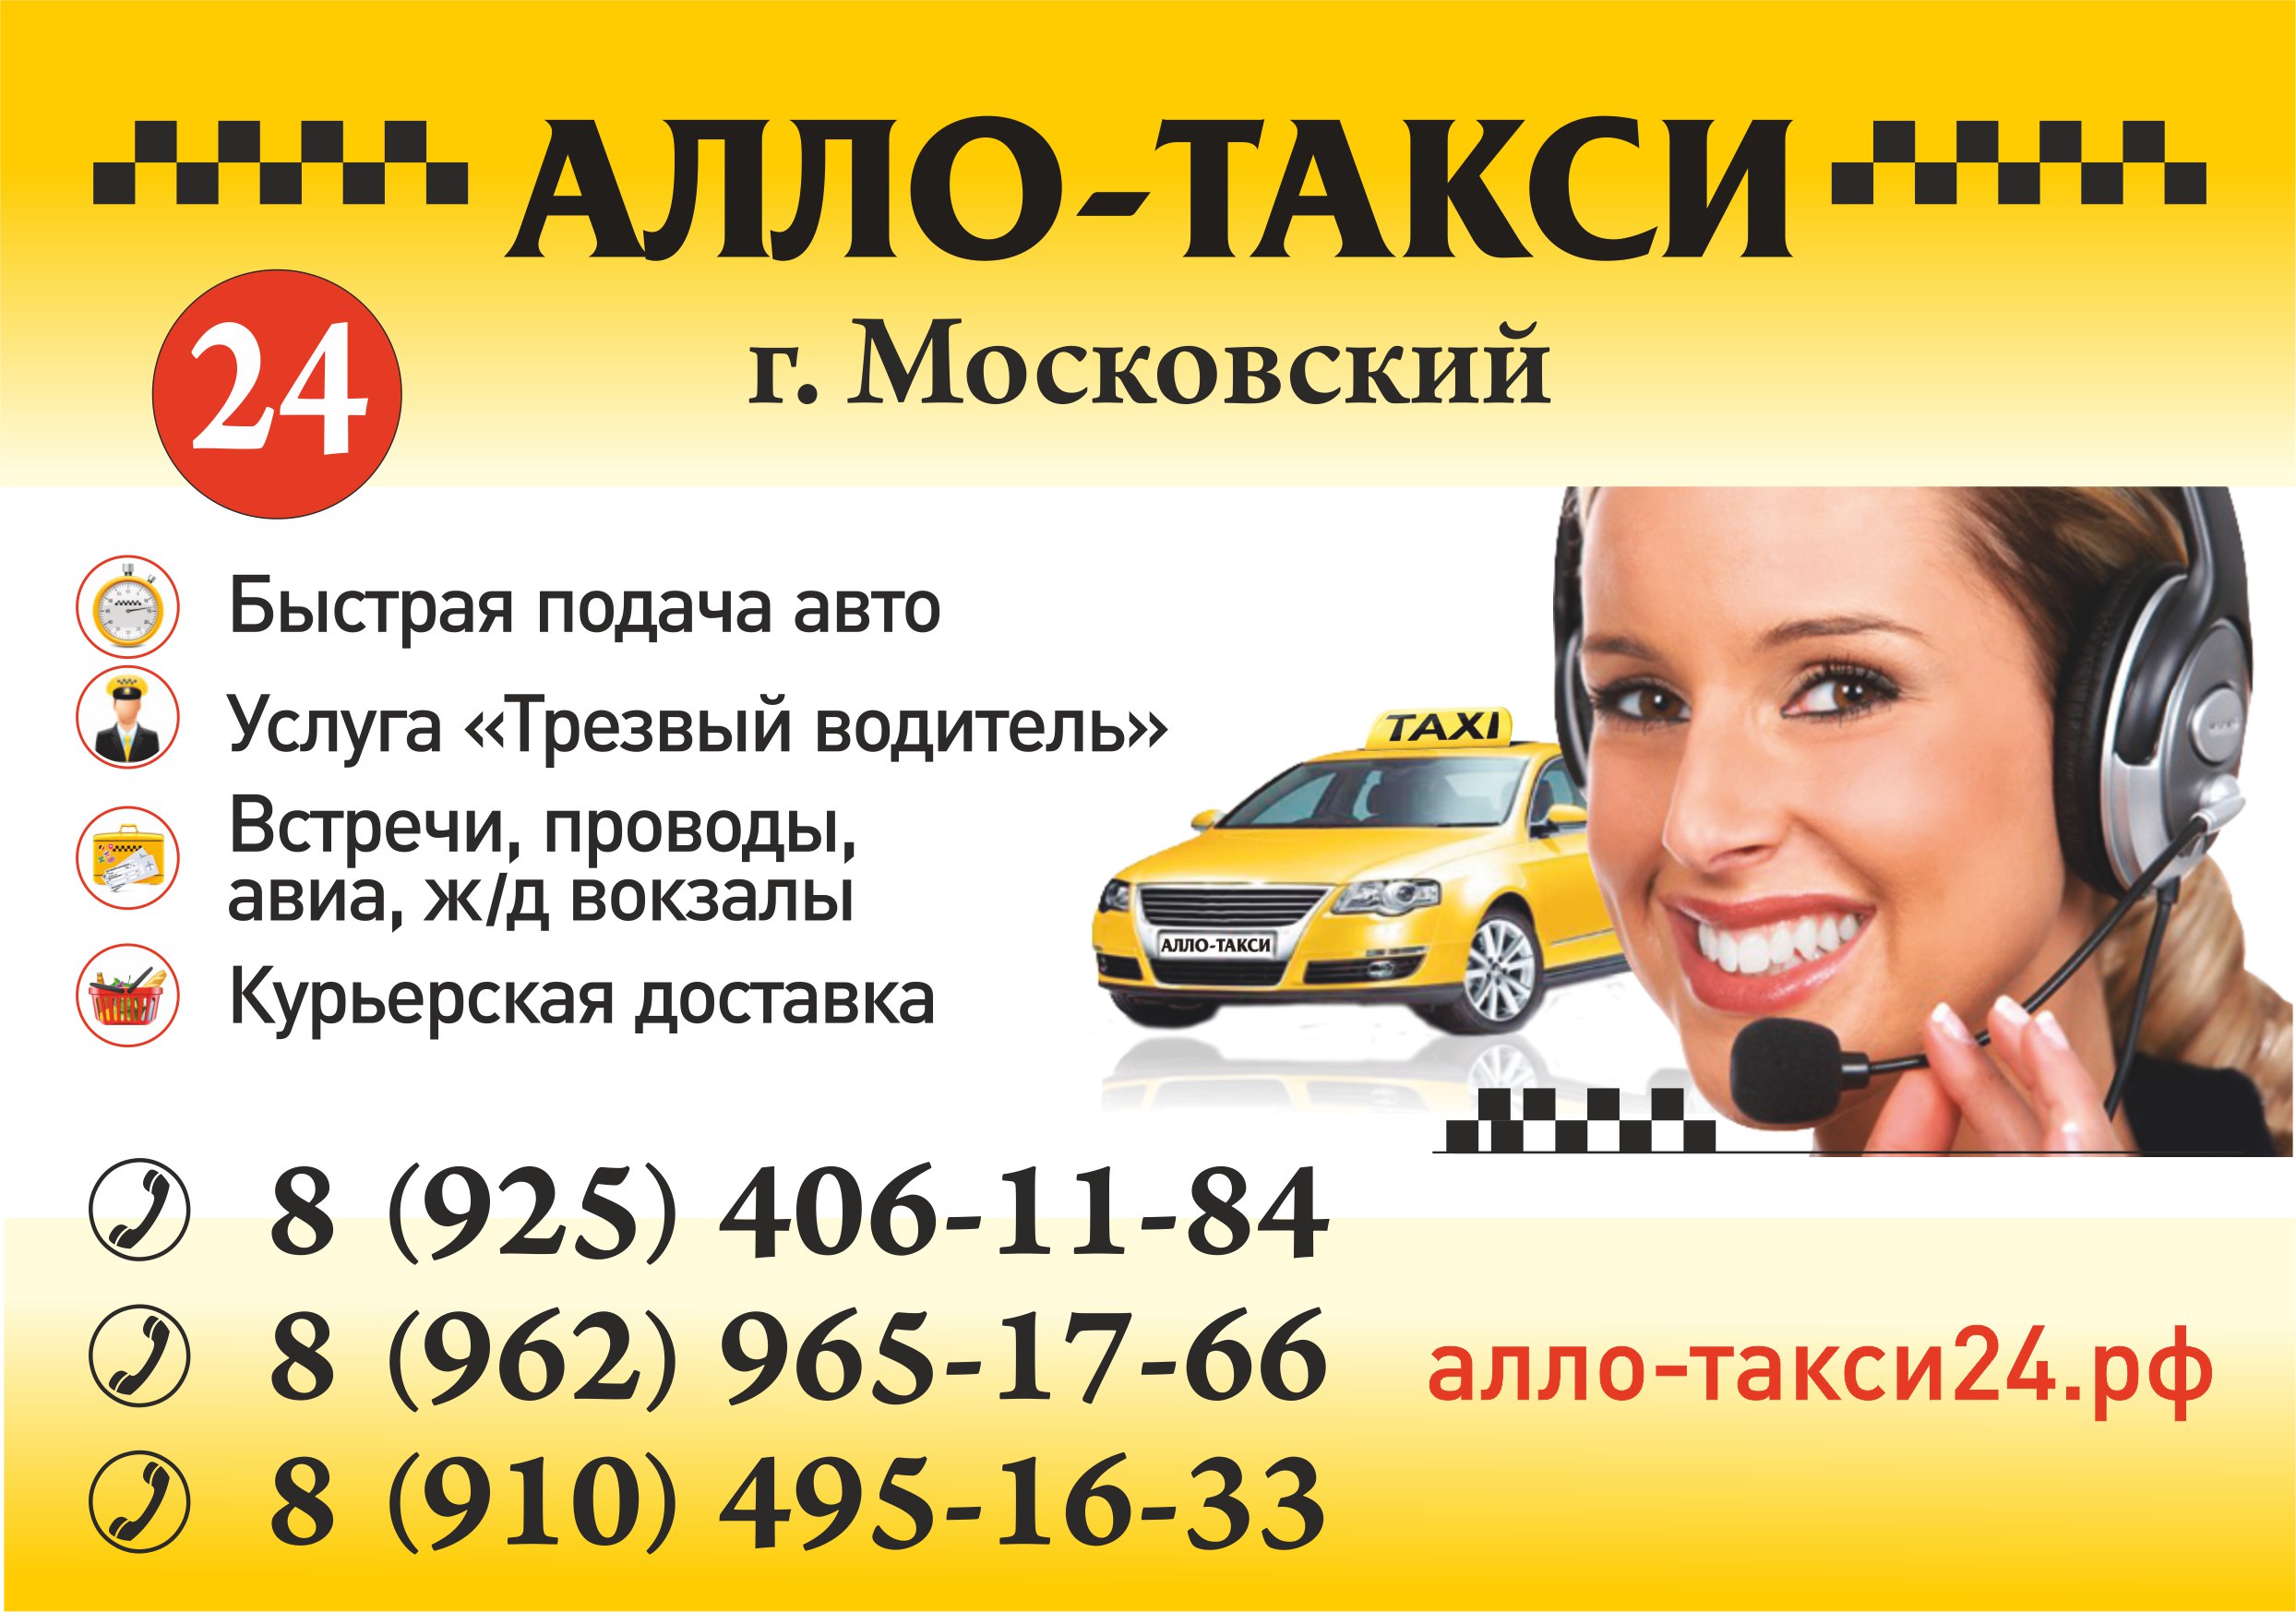 Омск такси дешевое телефоны. Номер такси. Номер телефона такси. Номер телефона таксиста. Номера таксистов.